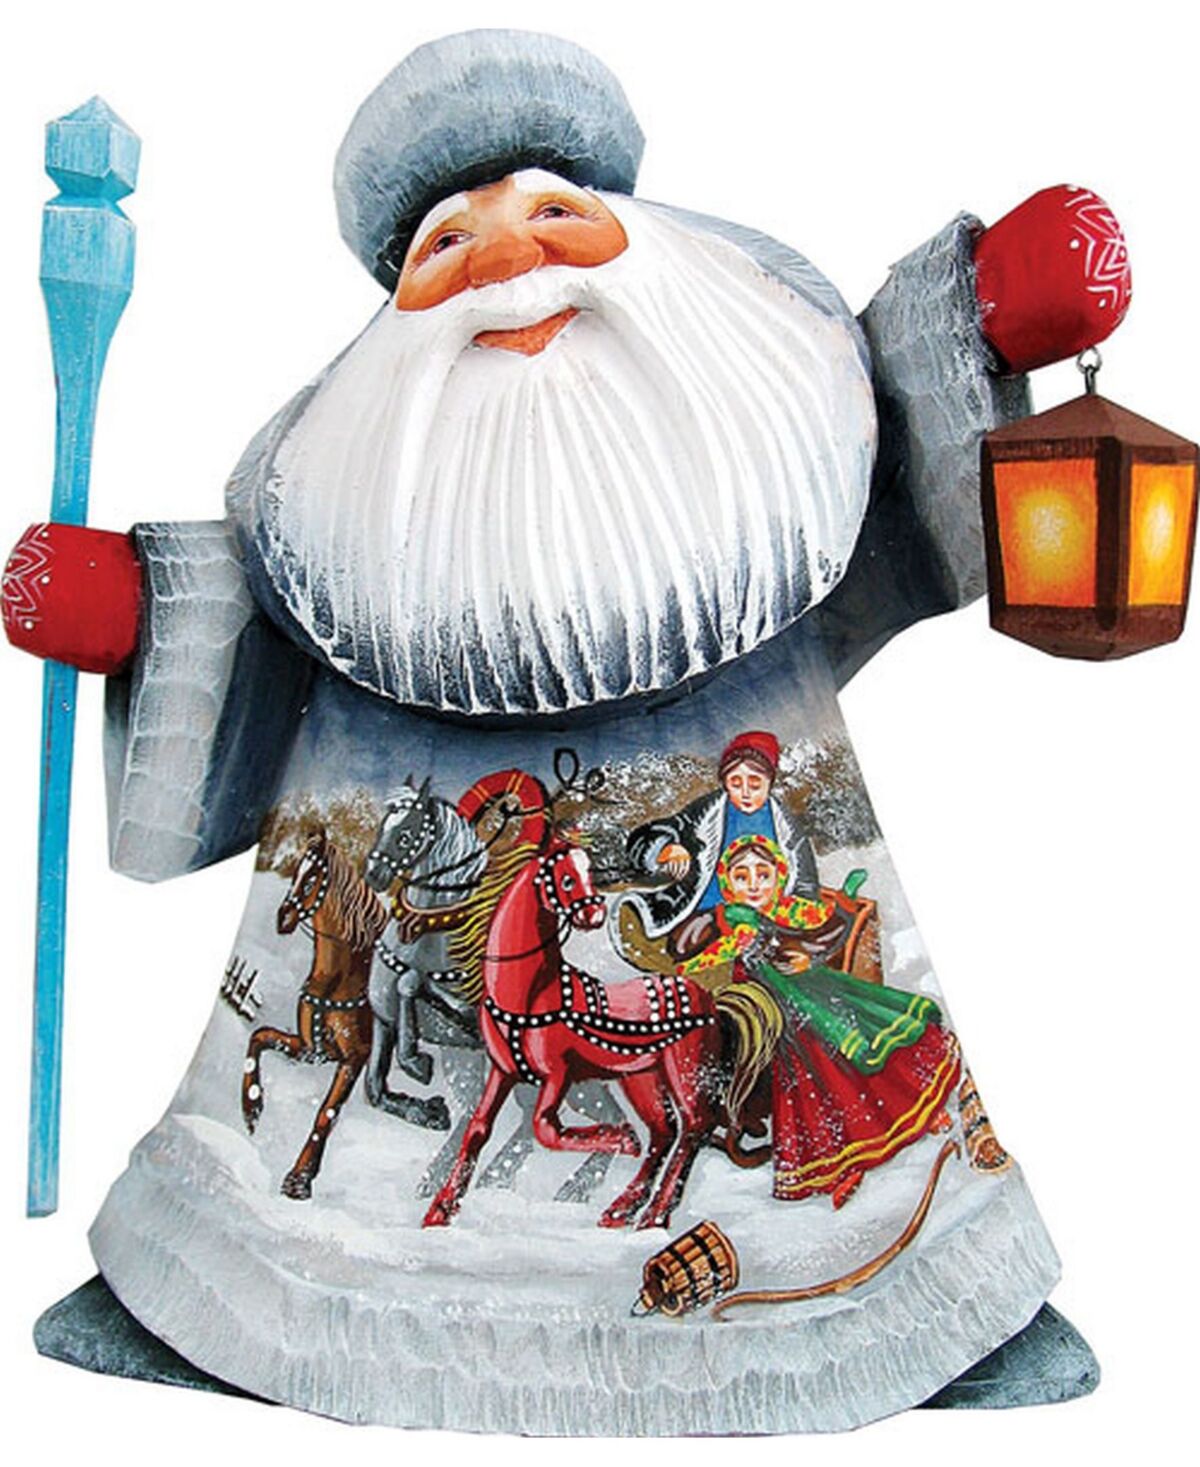 G.DeBrekht Woodcarved and Hand Painted Santa Dashing Nights Figurine - Multi